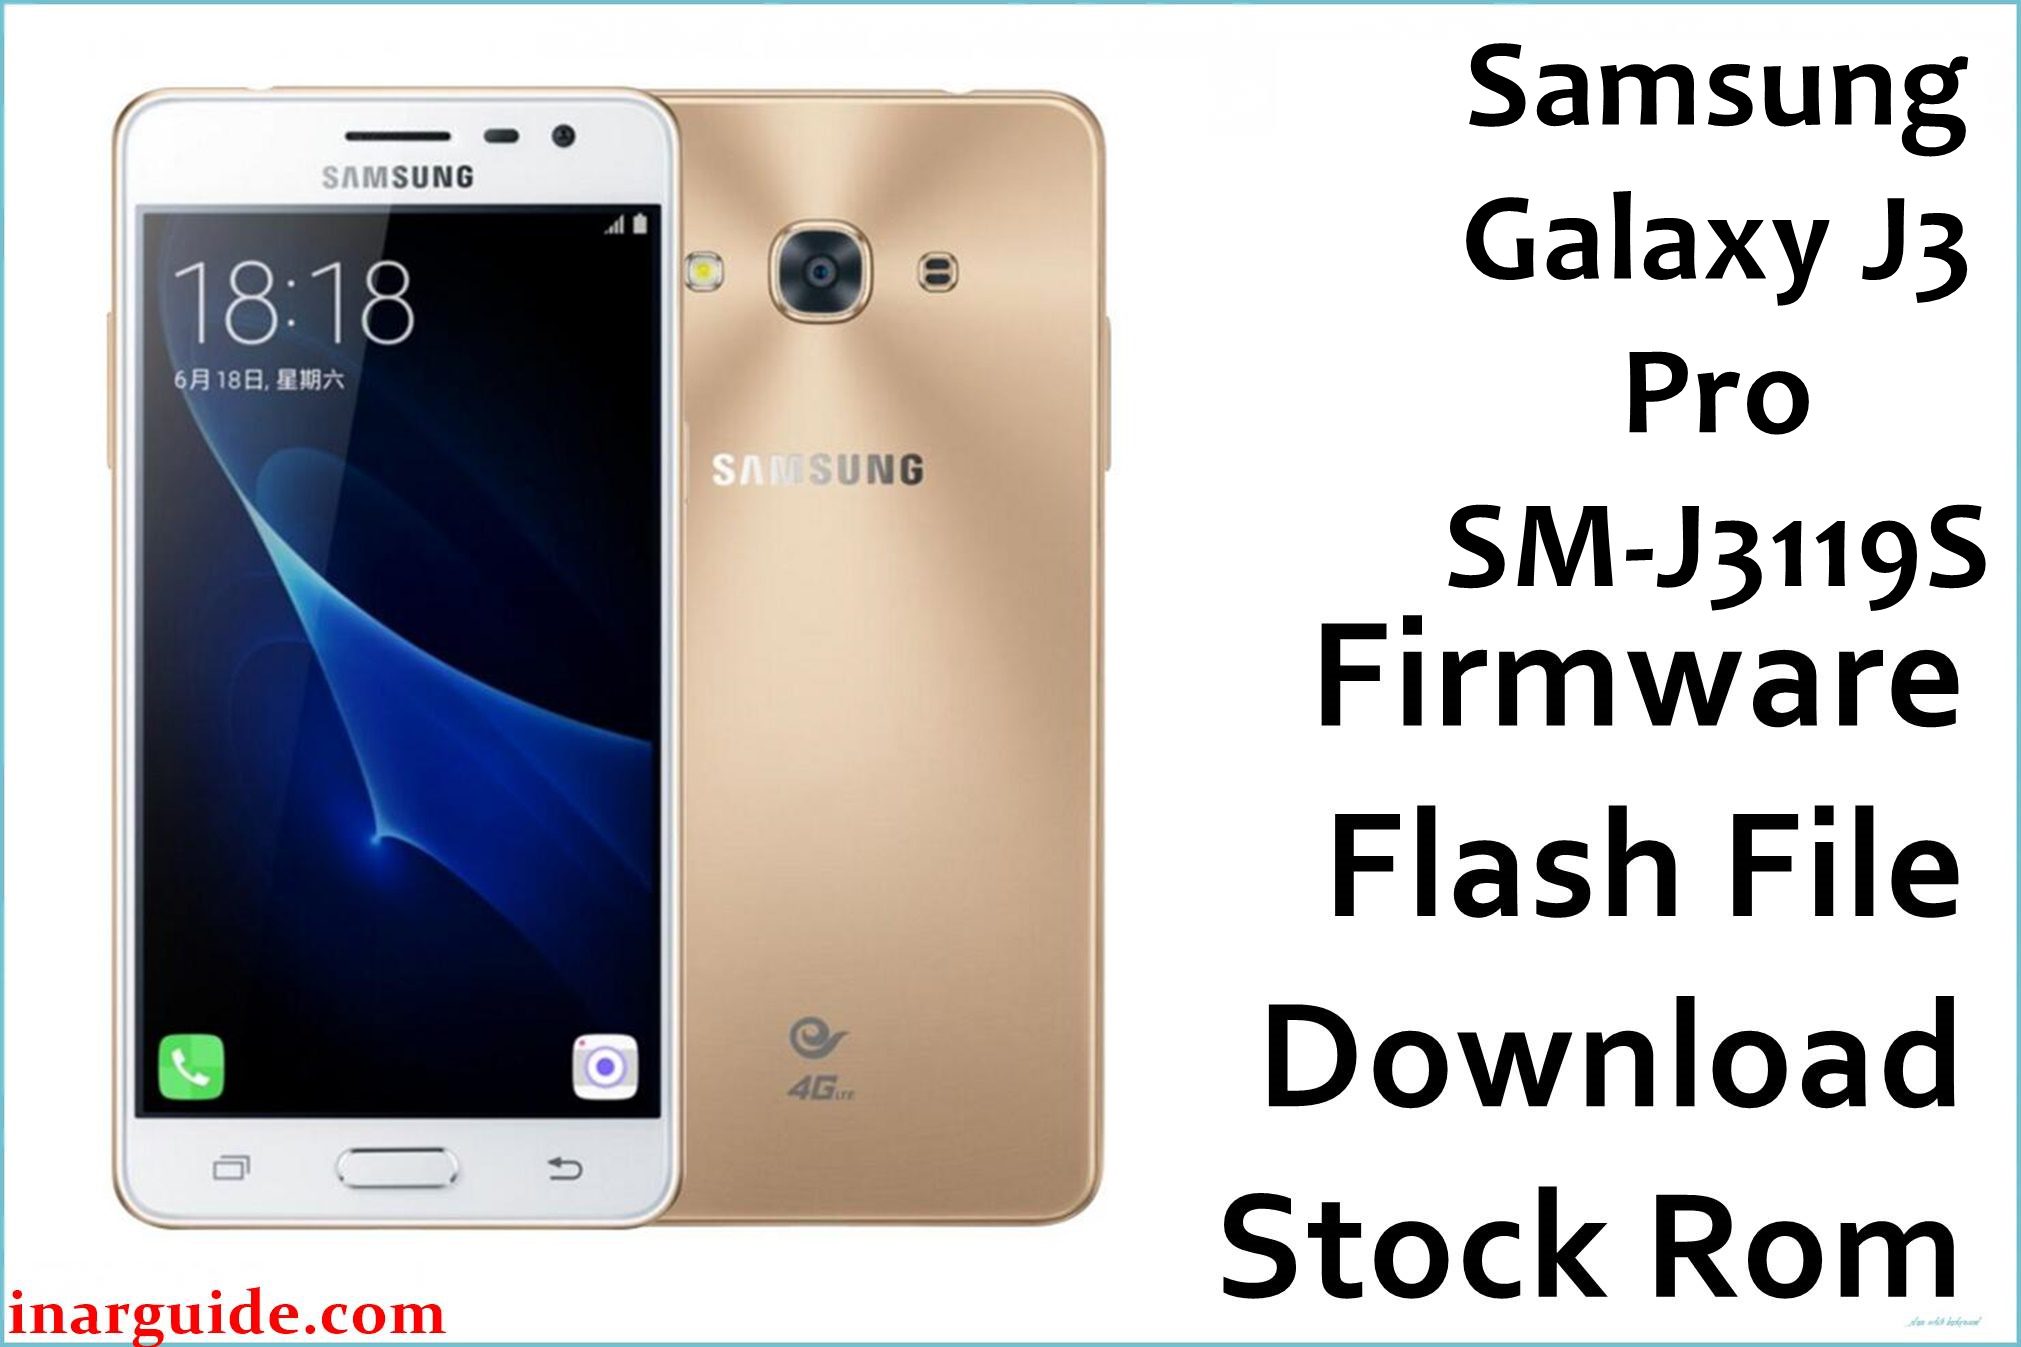 Samsung Galaxy J3 Pro SM J3119S